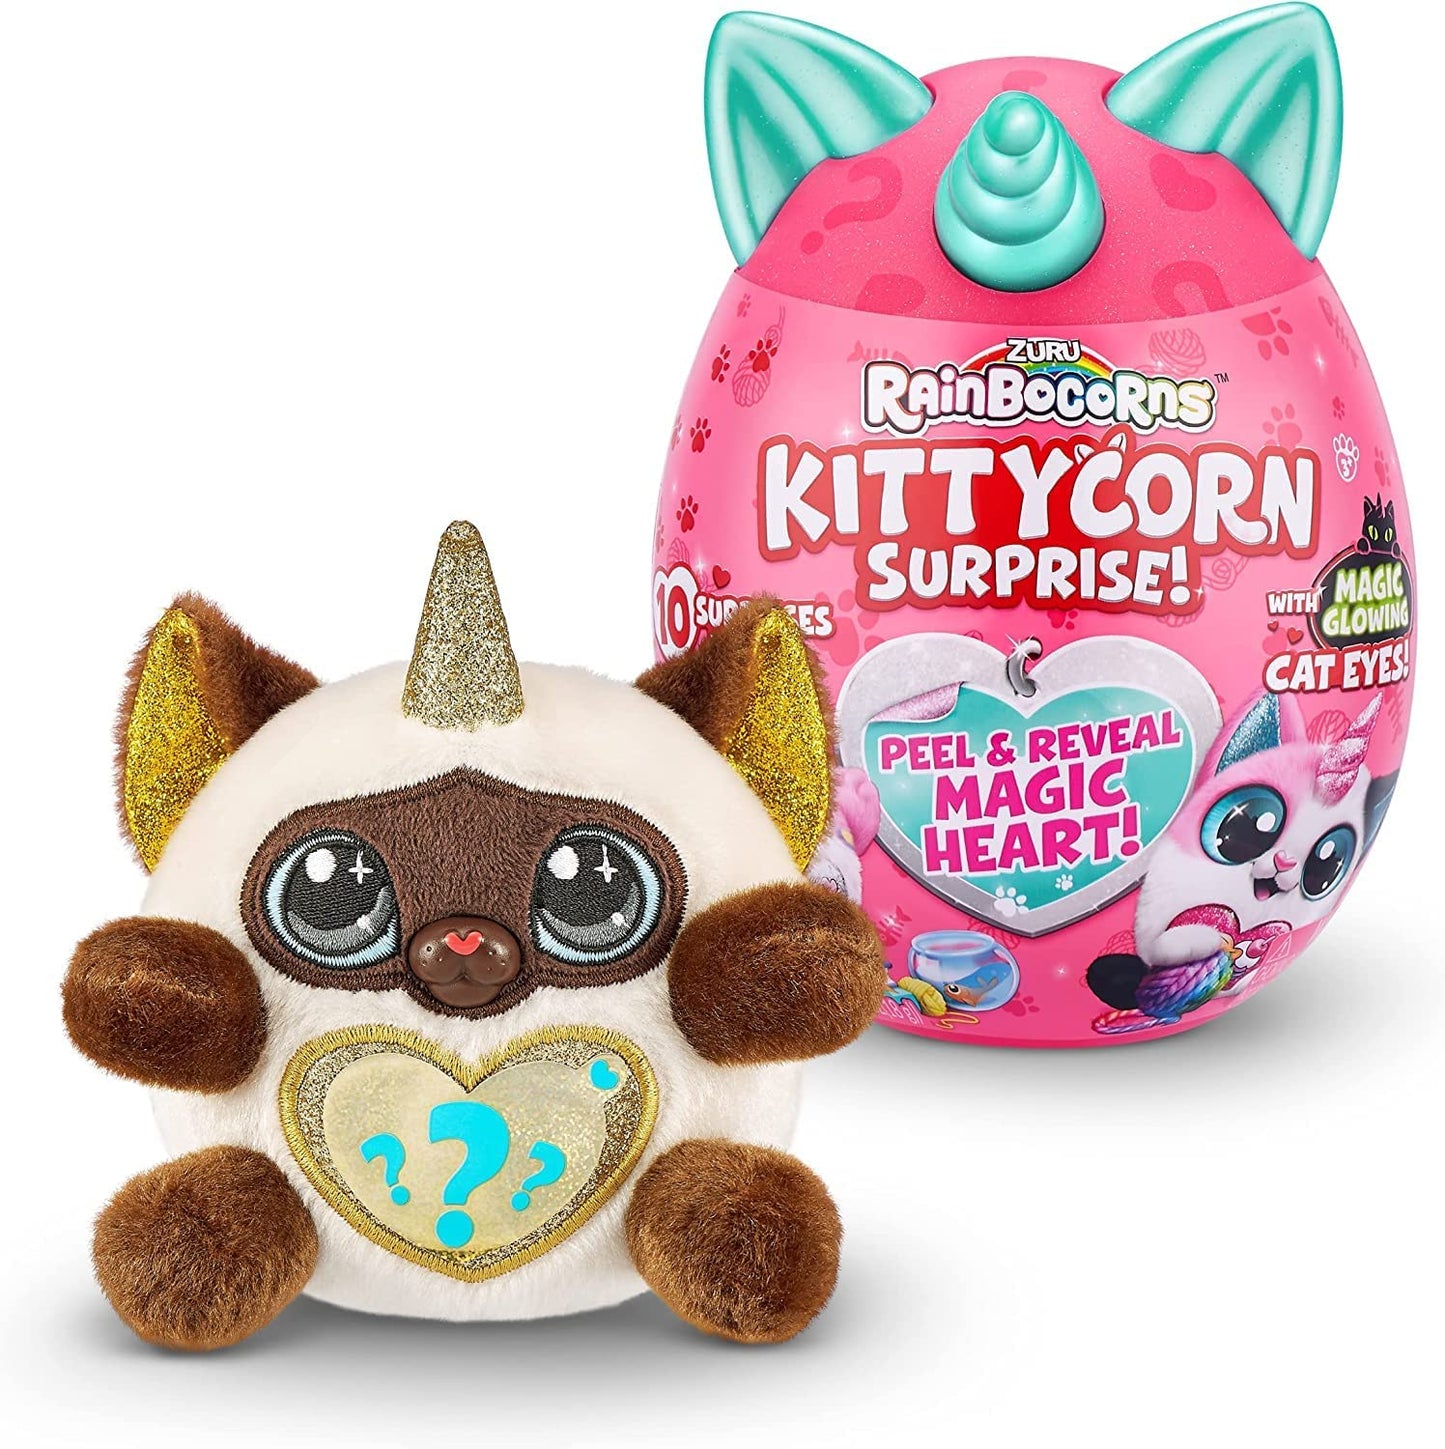 Rainbocorns Kittycorn Surprise Series 1 by ZURU, Collectible Plush Stuffed Animal, Surprise Egg - Random Style Pick